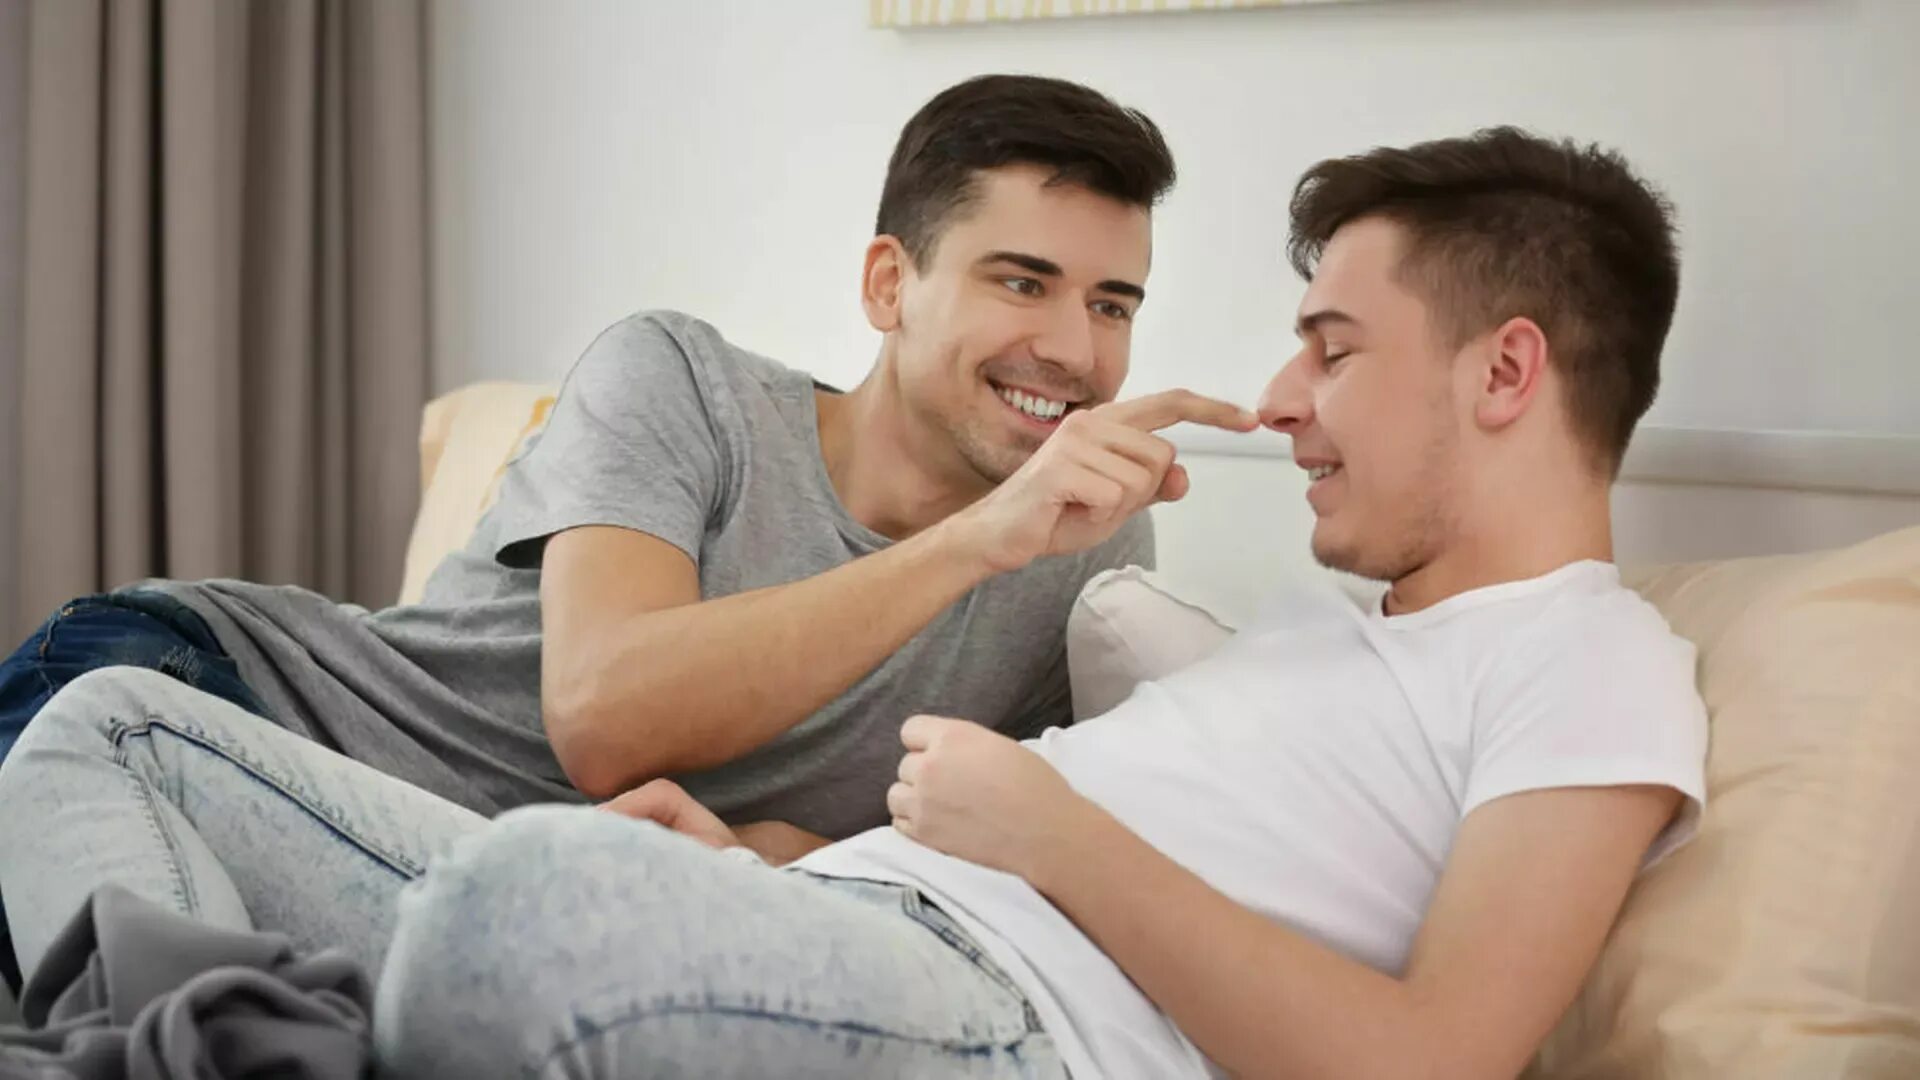 Гомосексуальные мужчины. Гомосексуальная пара в постели. Однополая любовь мужчин. Гомосексуальный подросток.